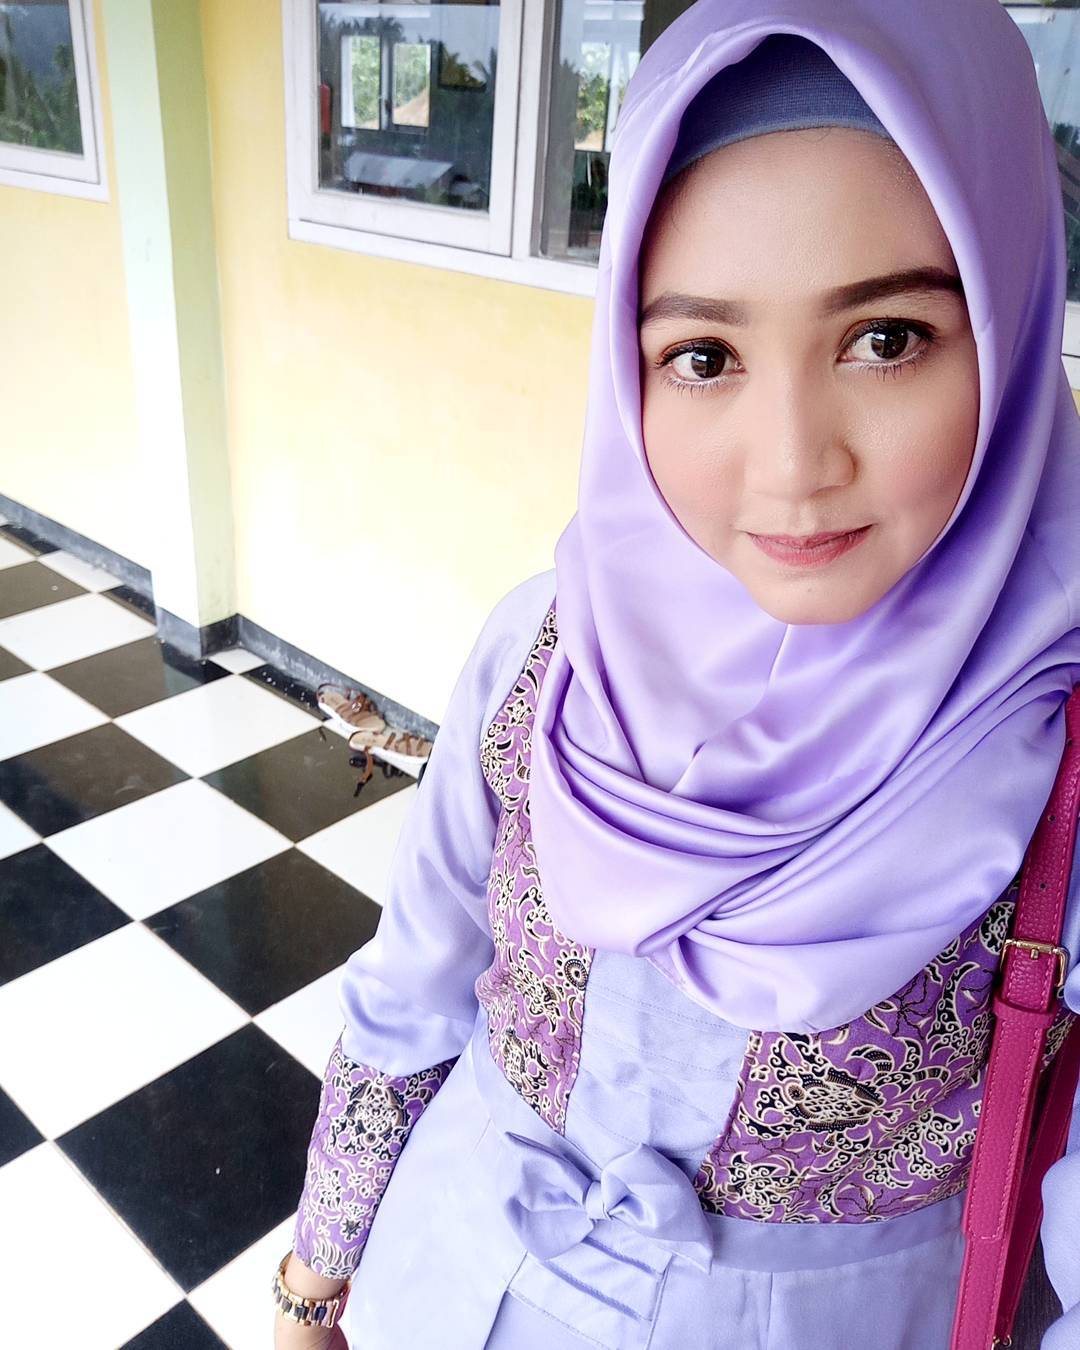 Bokep jilbab cantik. Jilboobs pentilnya. Queen jilboobs. Jilbab Aceh. Jilboobs r1.